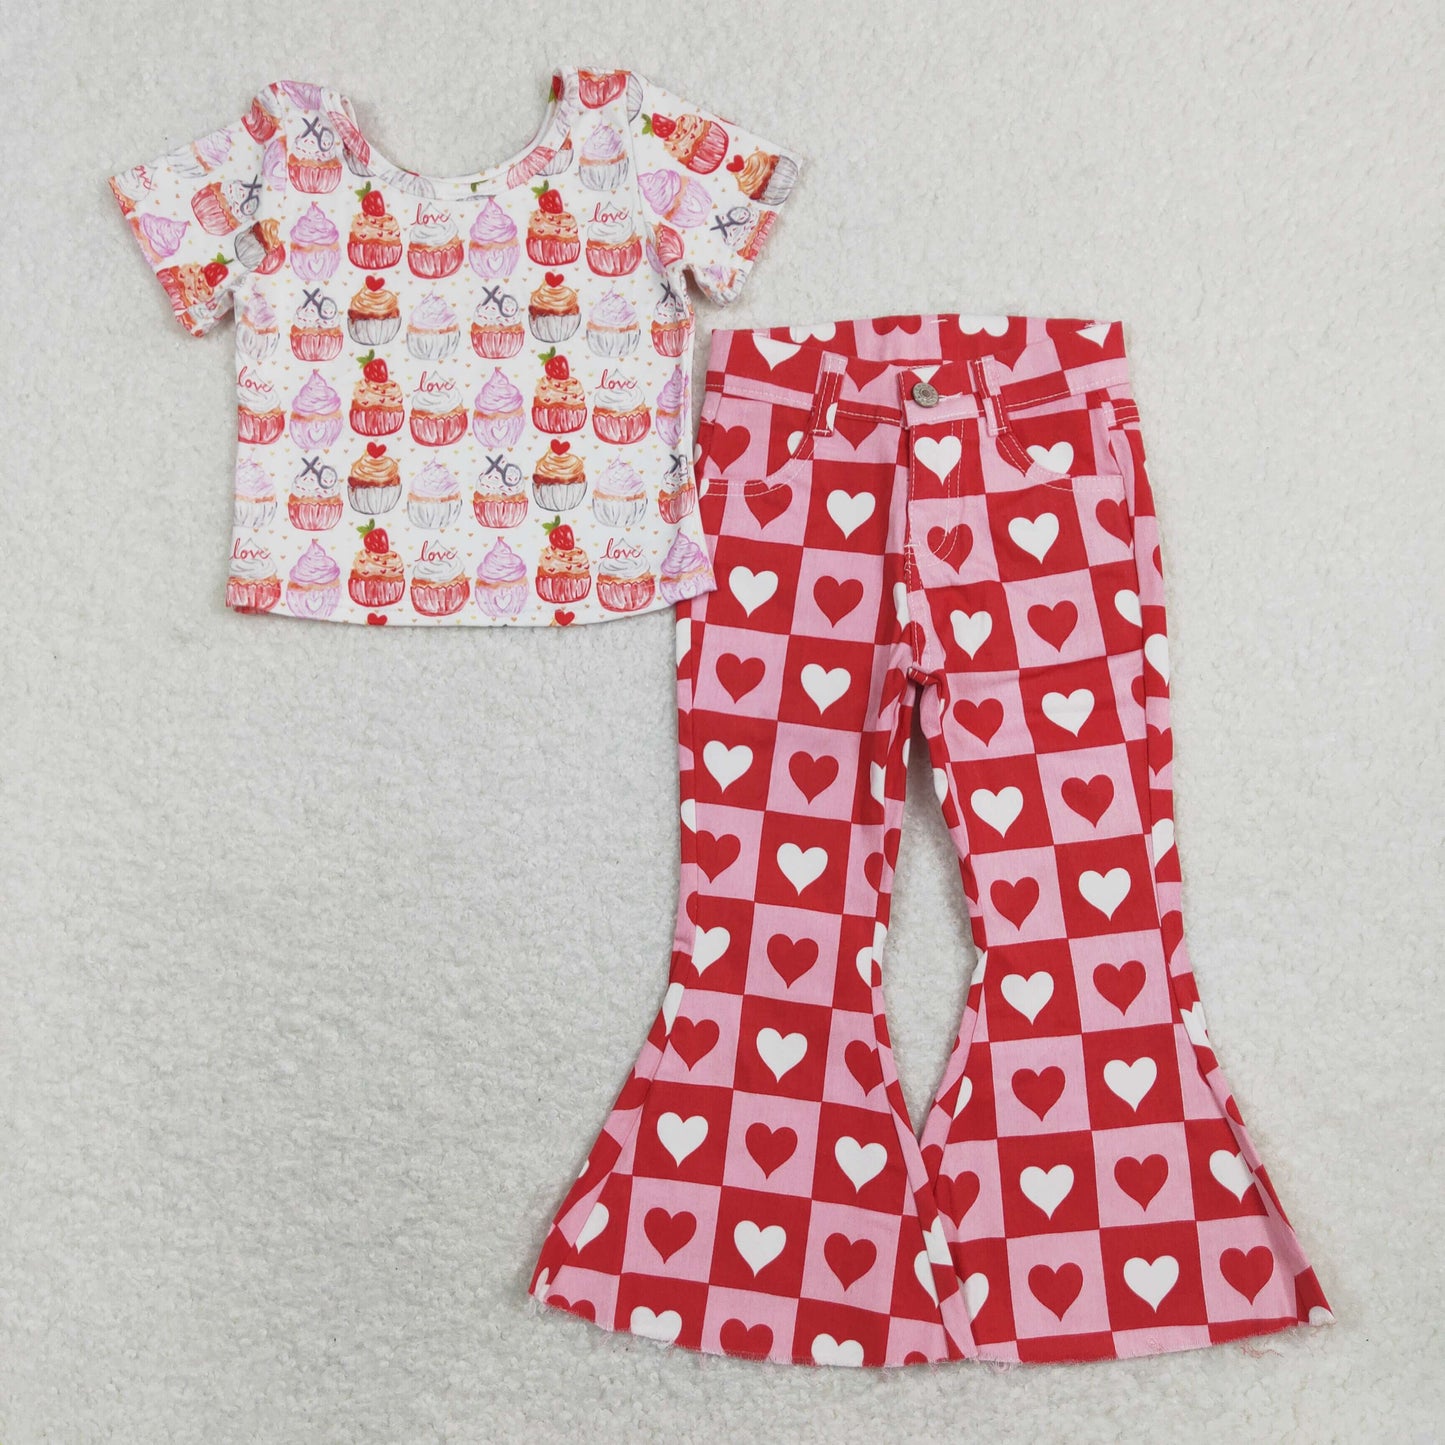 GSPO1362 Pink Cupcake Top Heart Denim Bell Bottom Jeans Girls Valentine's Clothes Set